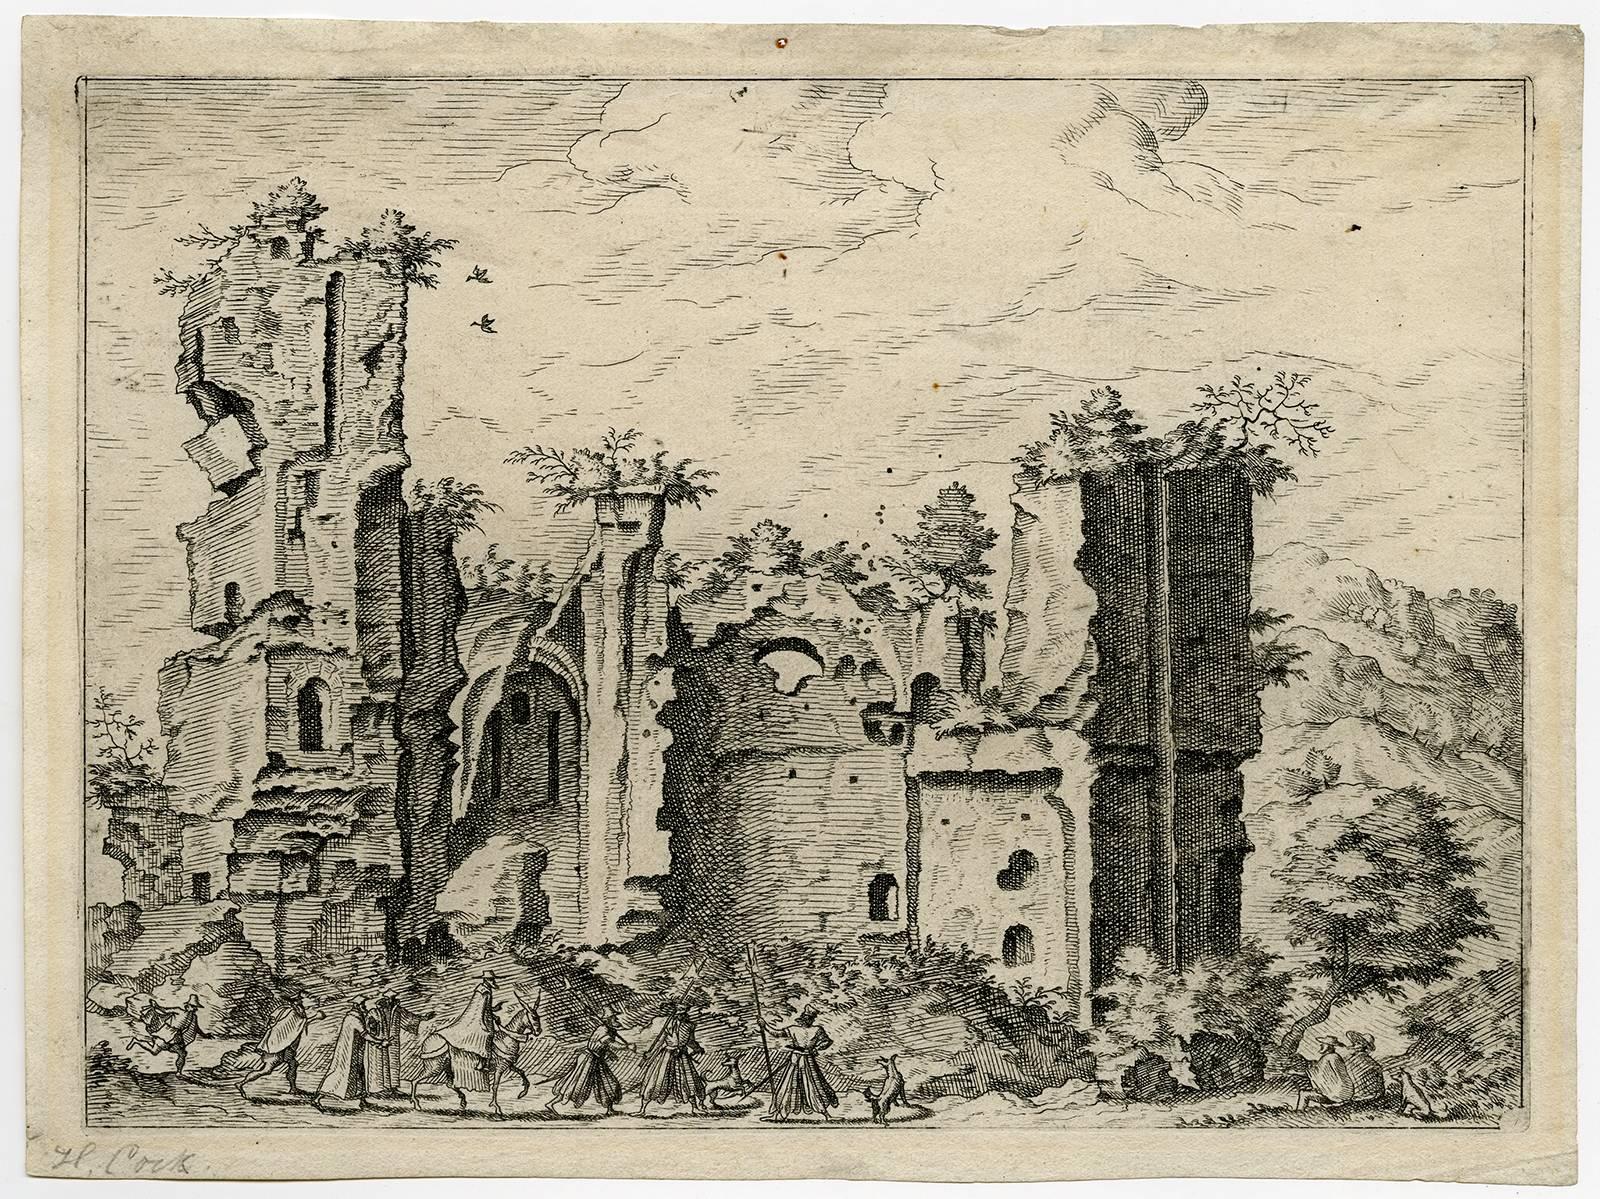 Johannes van Doetecum Landscape Print - Untitled - Ruins, perhaps the Baths of Caracalla.